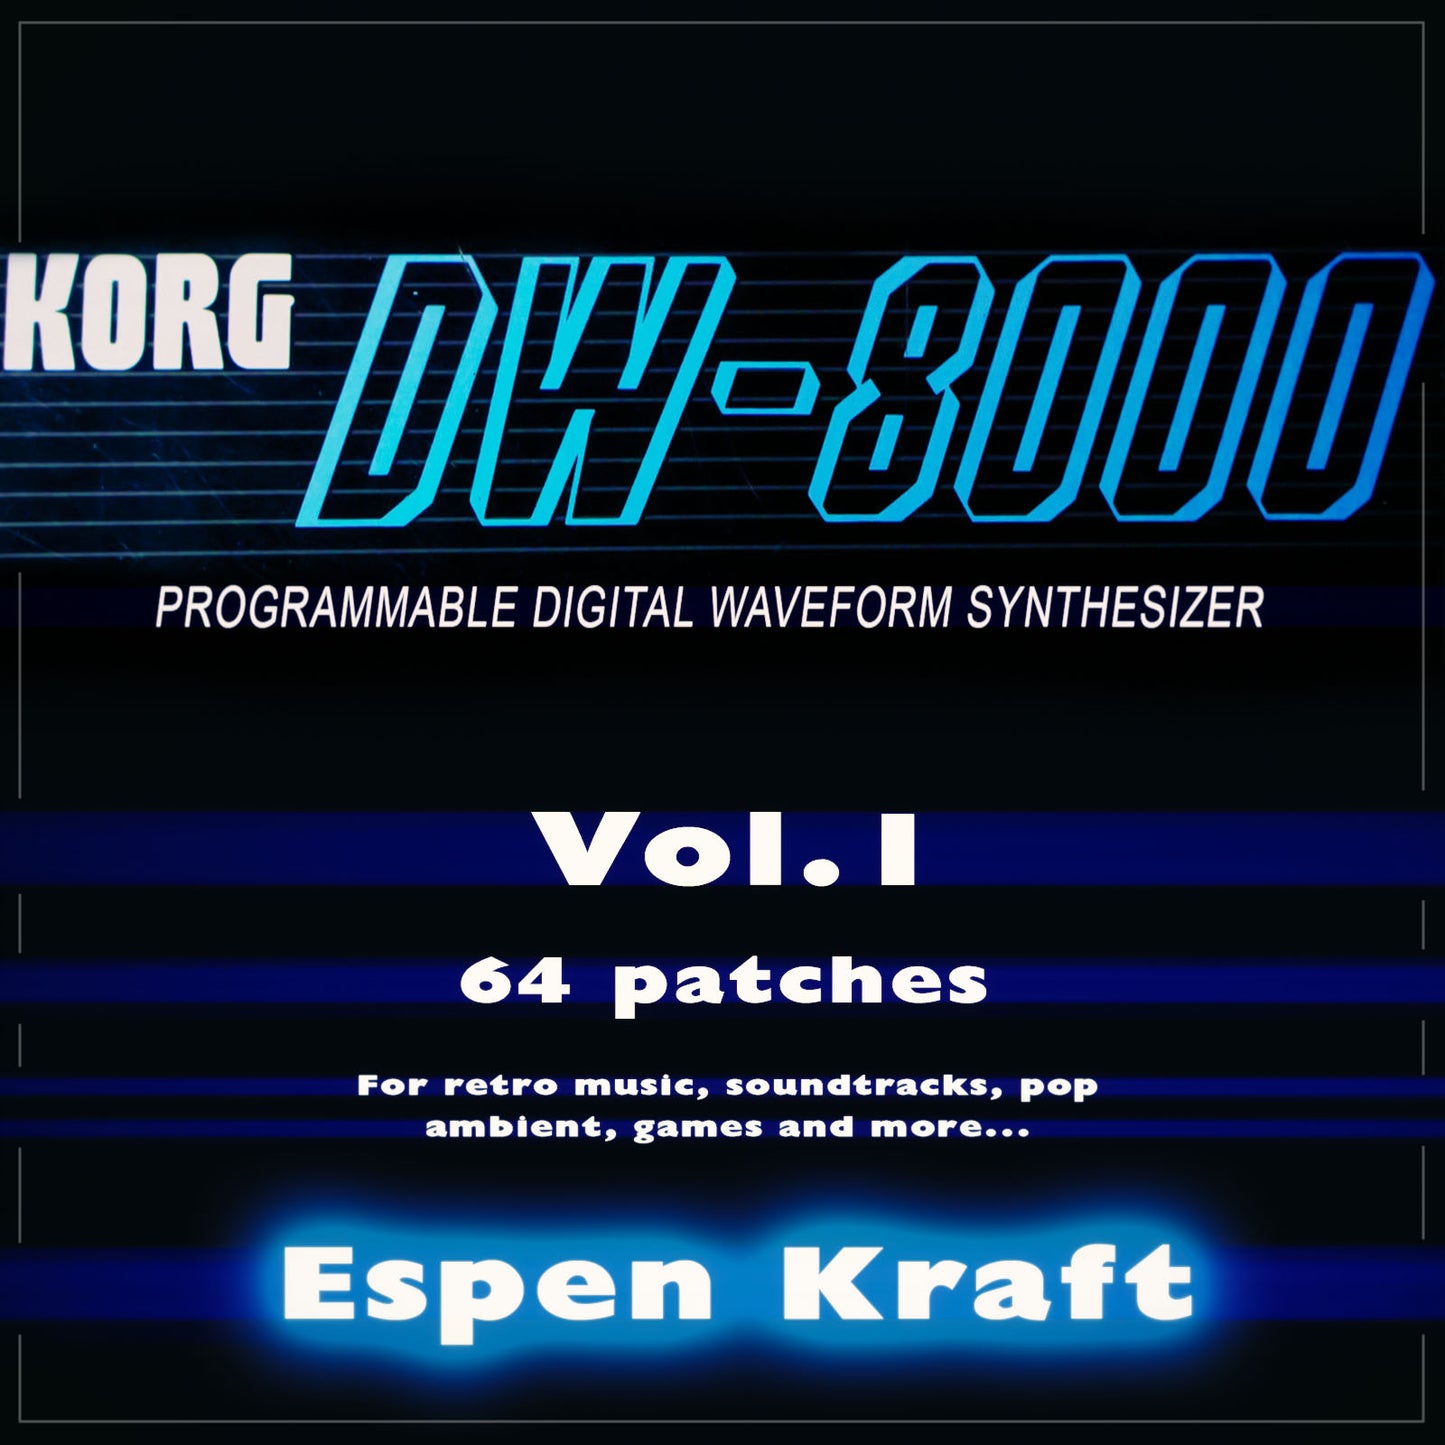 korg-dw8000-fb7999-vst-plugin-patch-bank